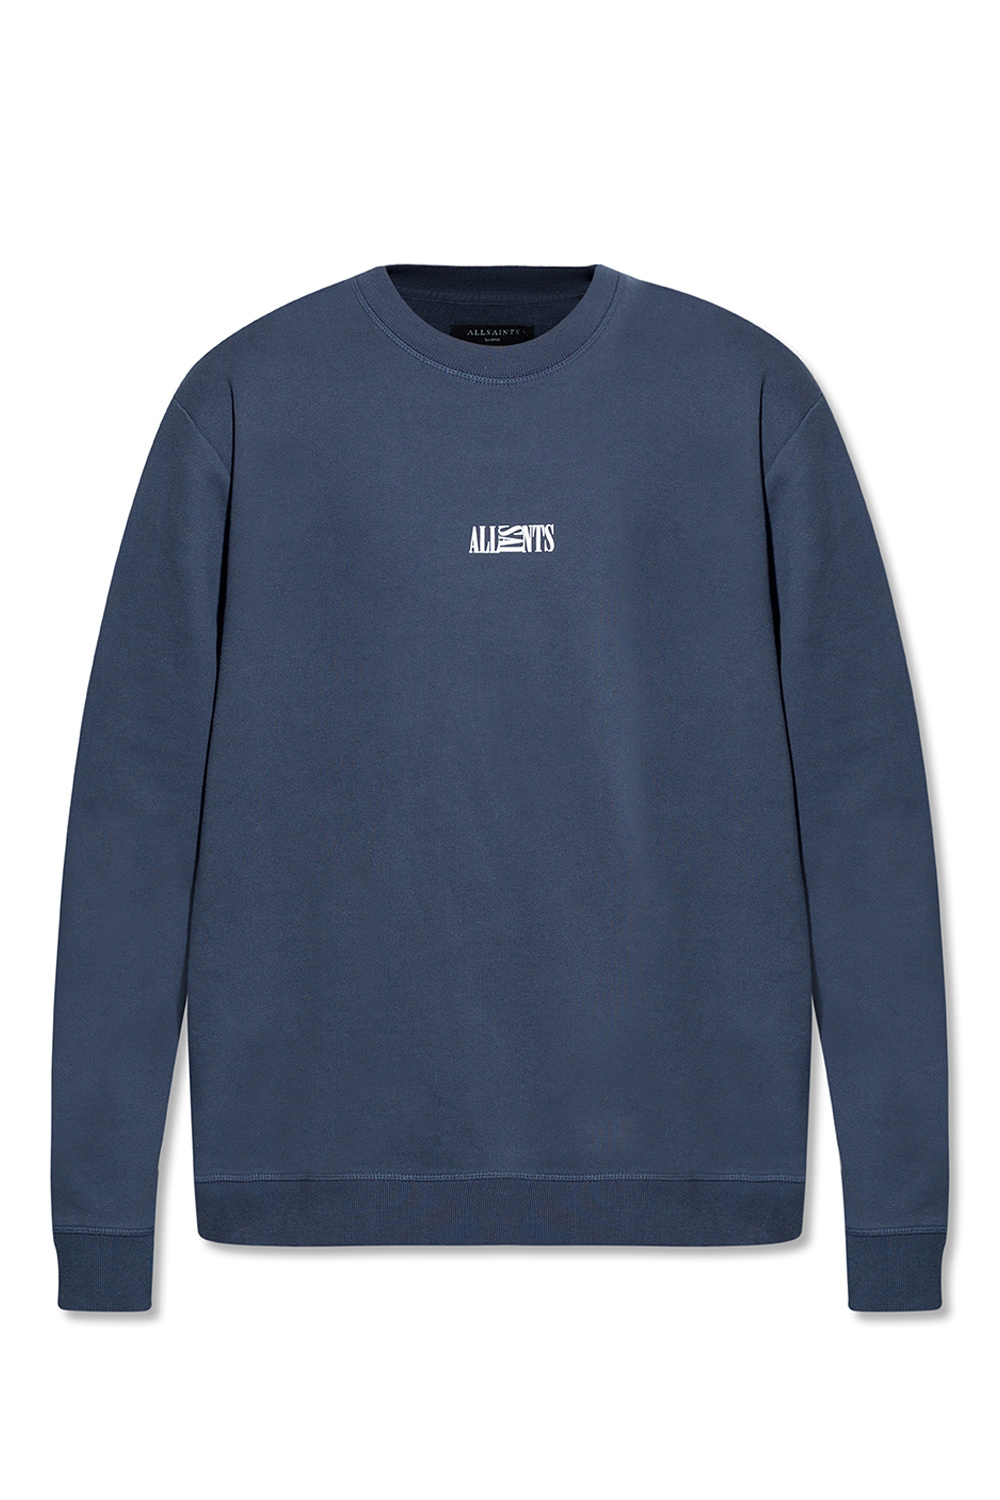 AllSaints ‘Opposittion’ sweatshirt with logo